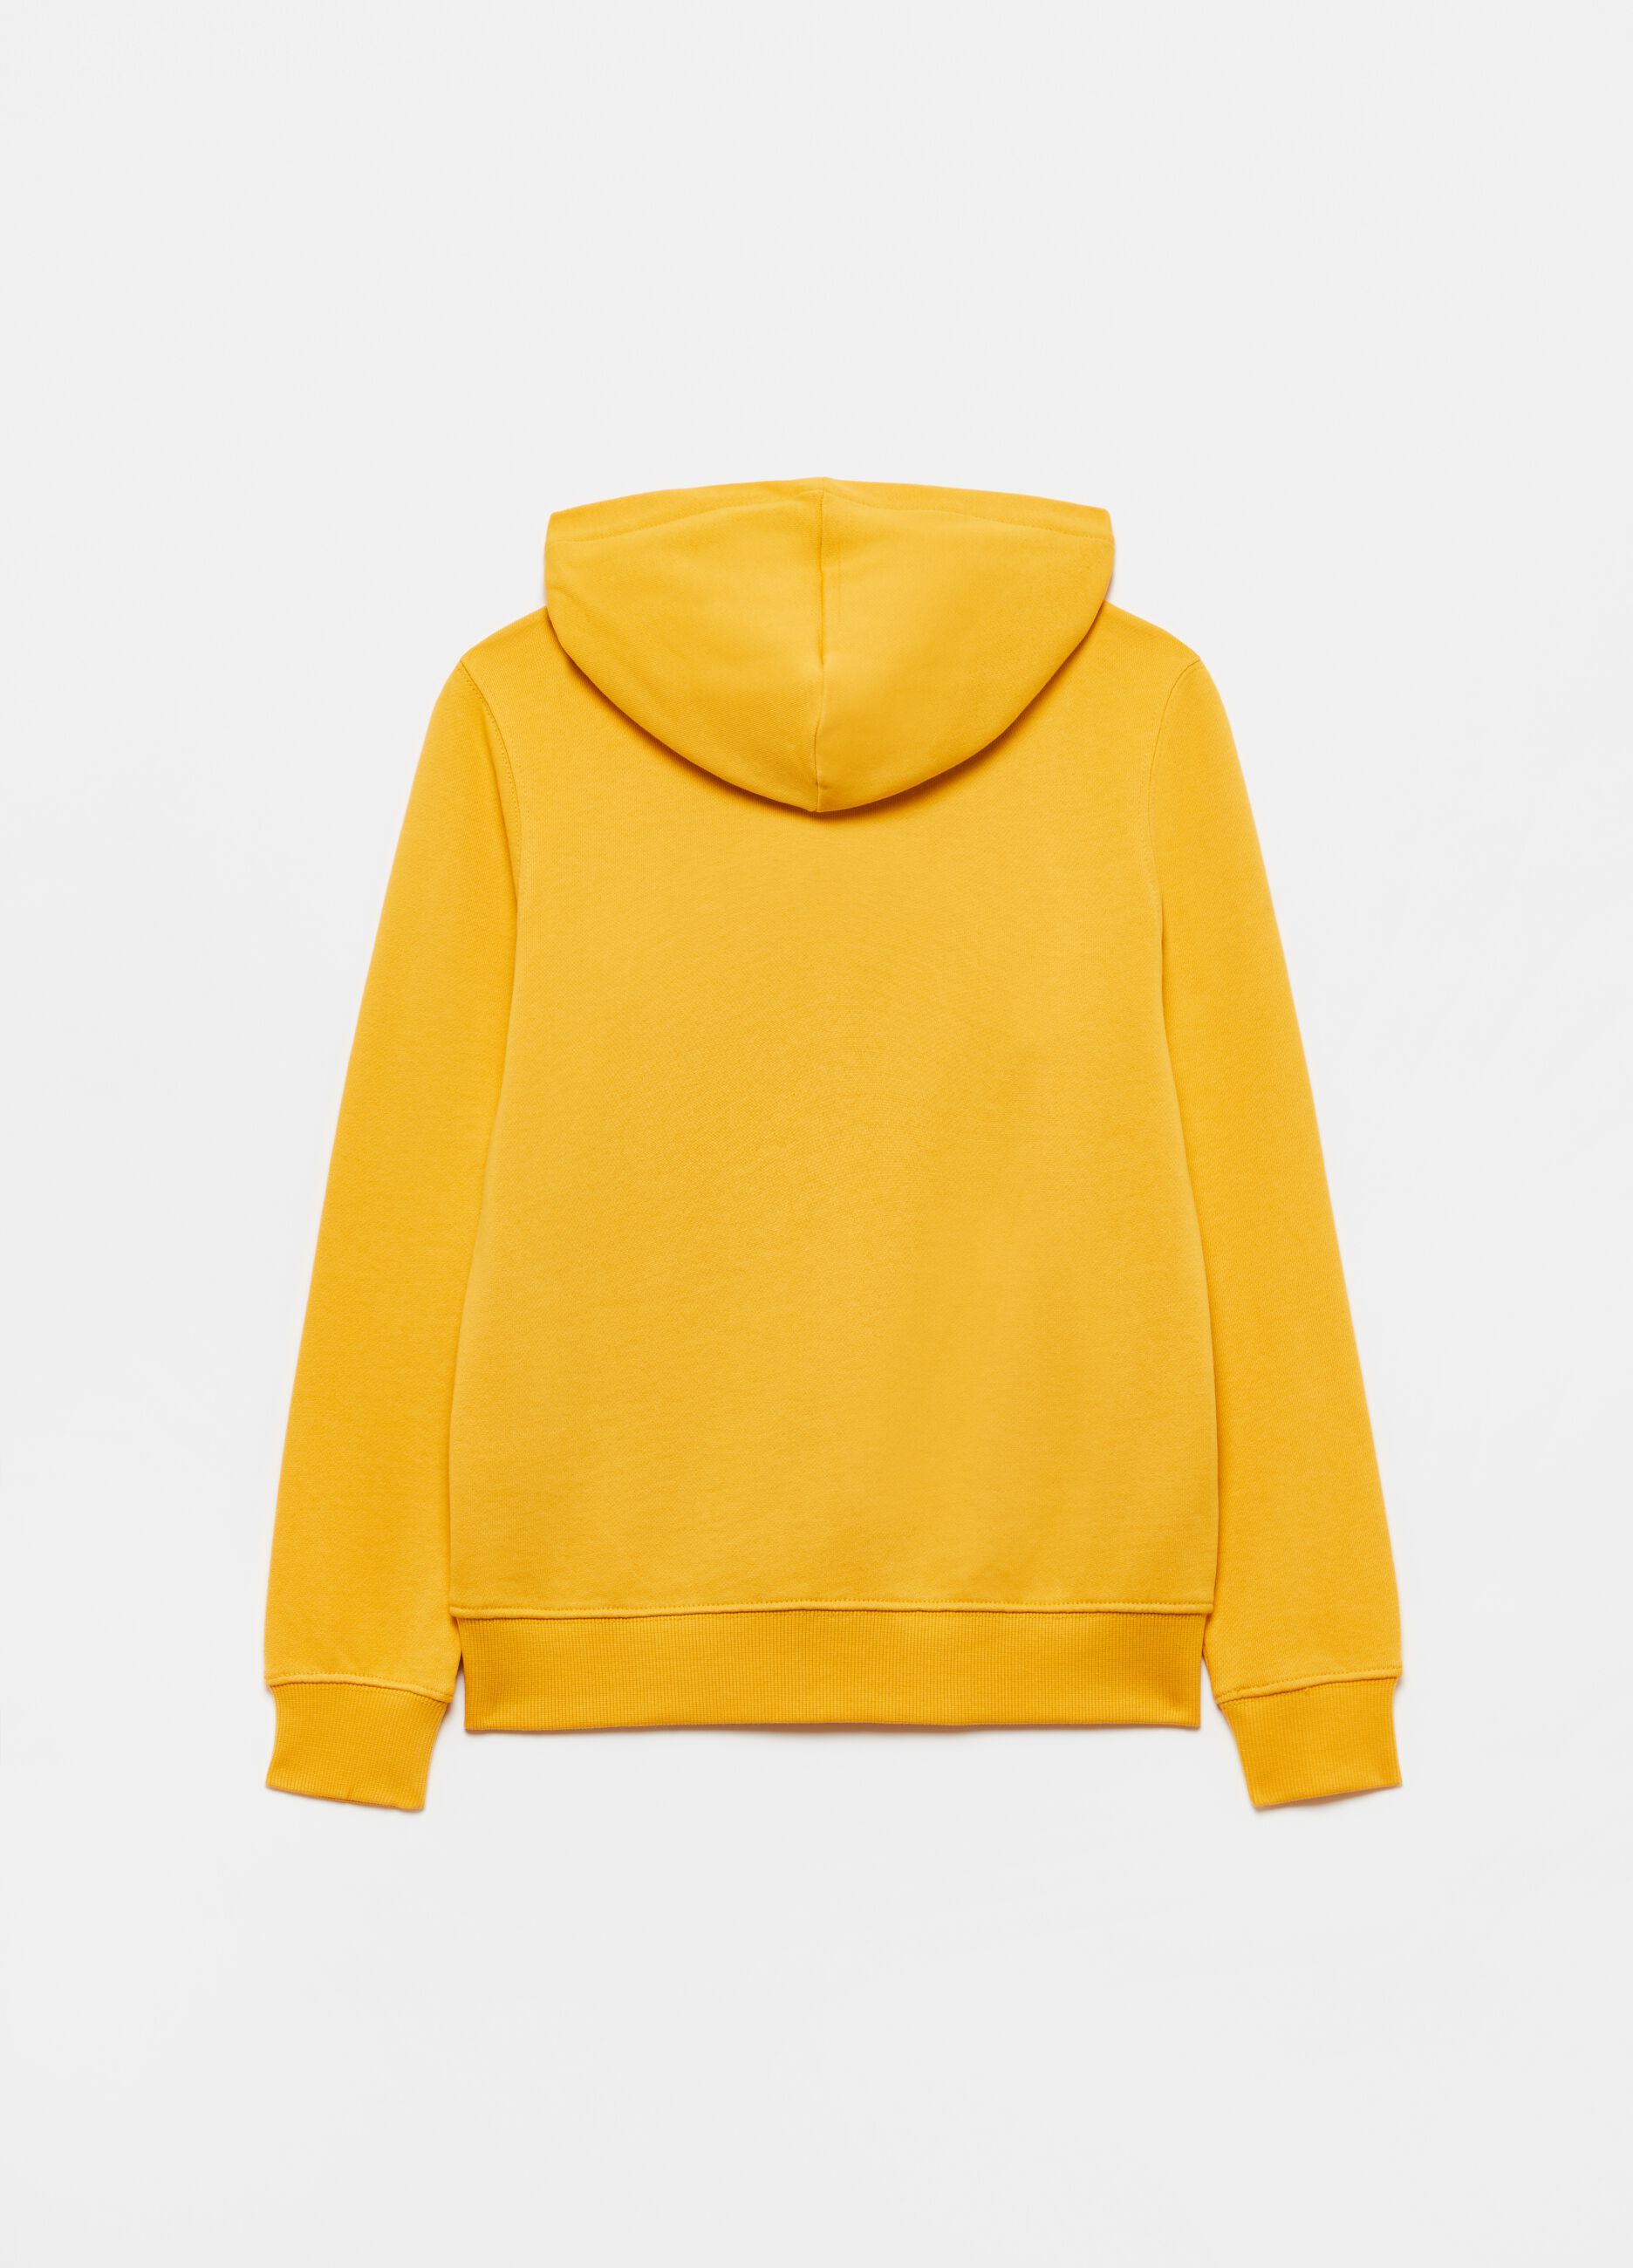 Solid colour cotton full-zip sweatshirt with hood